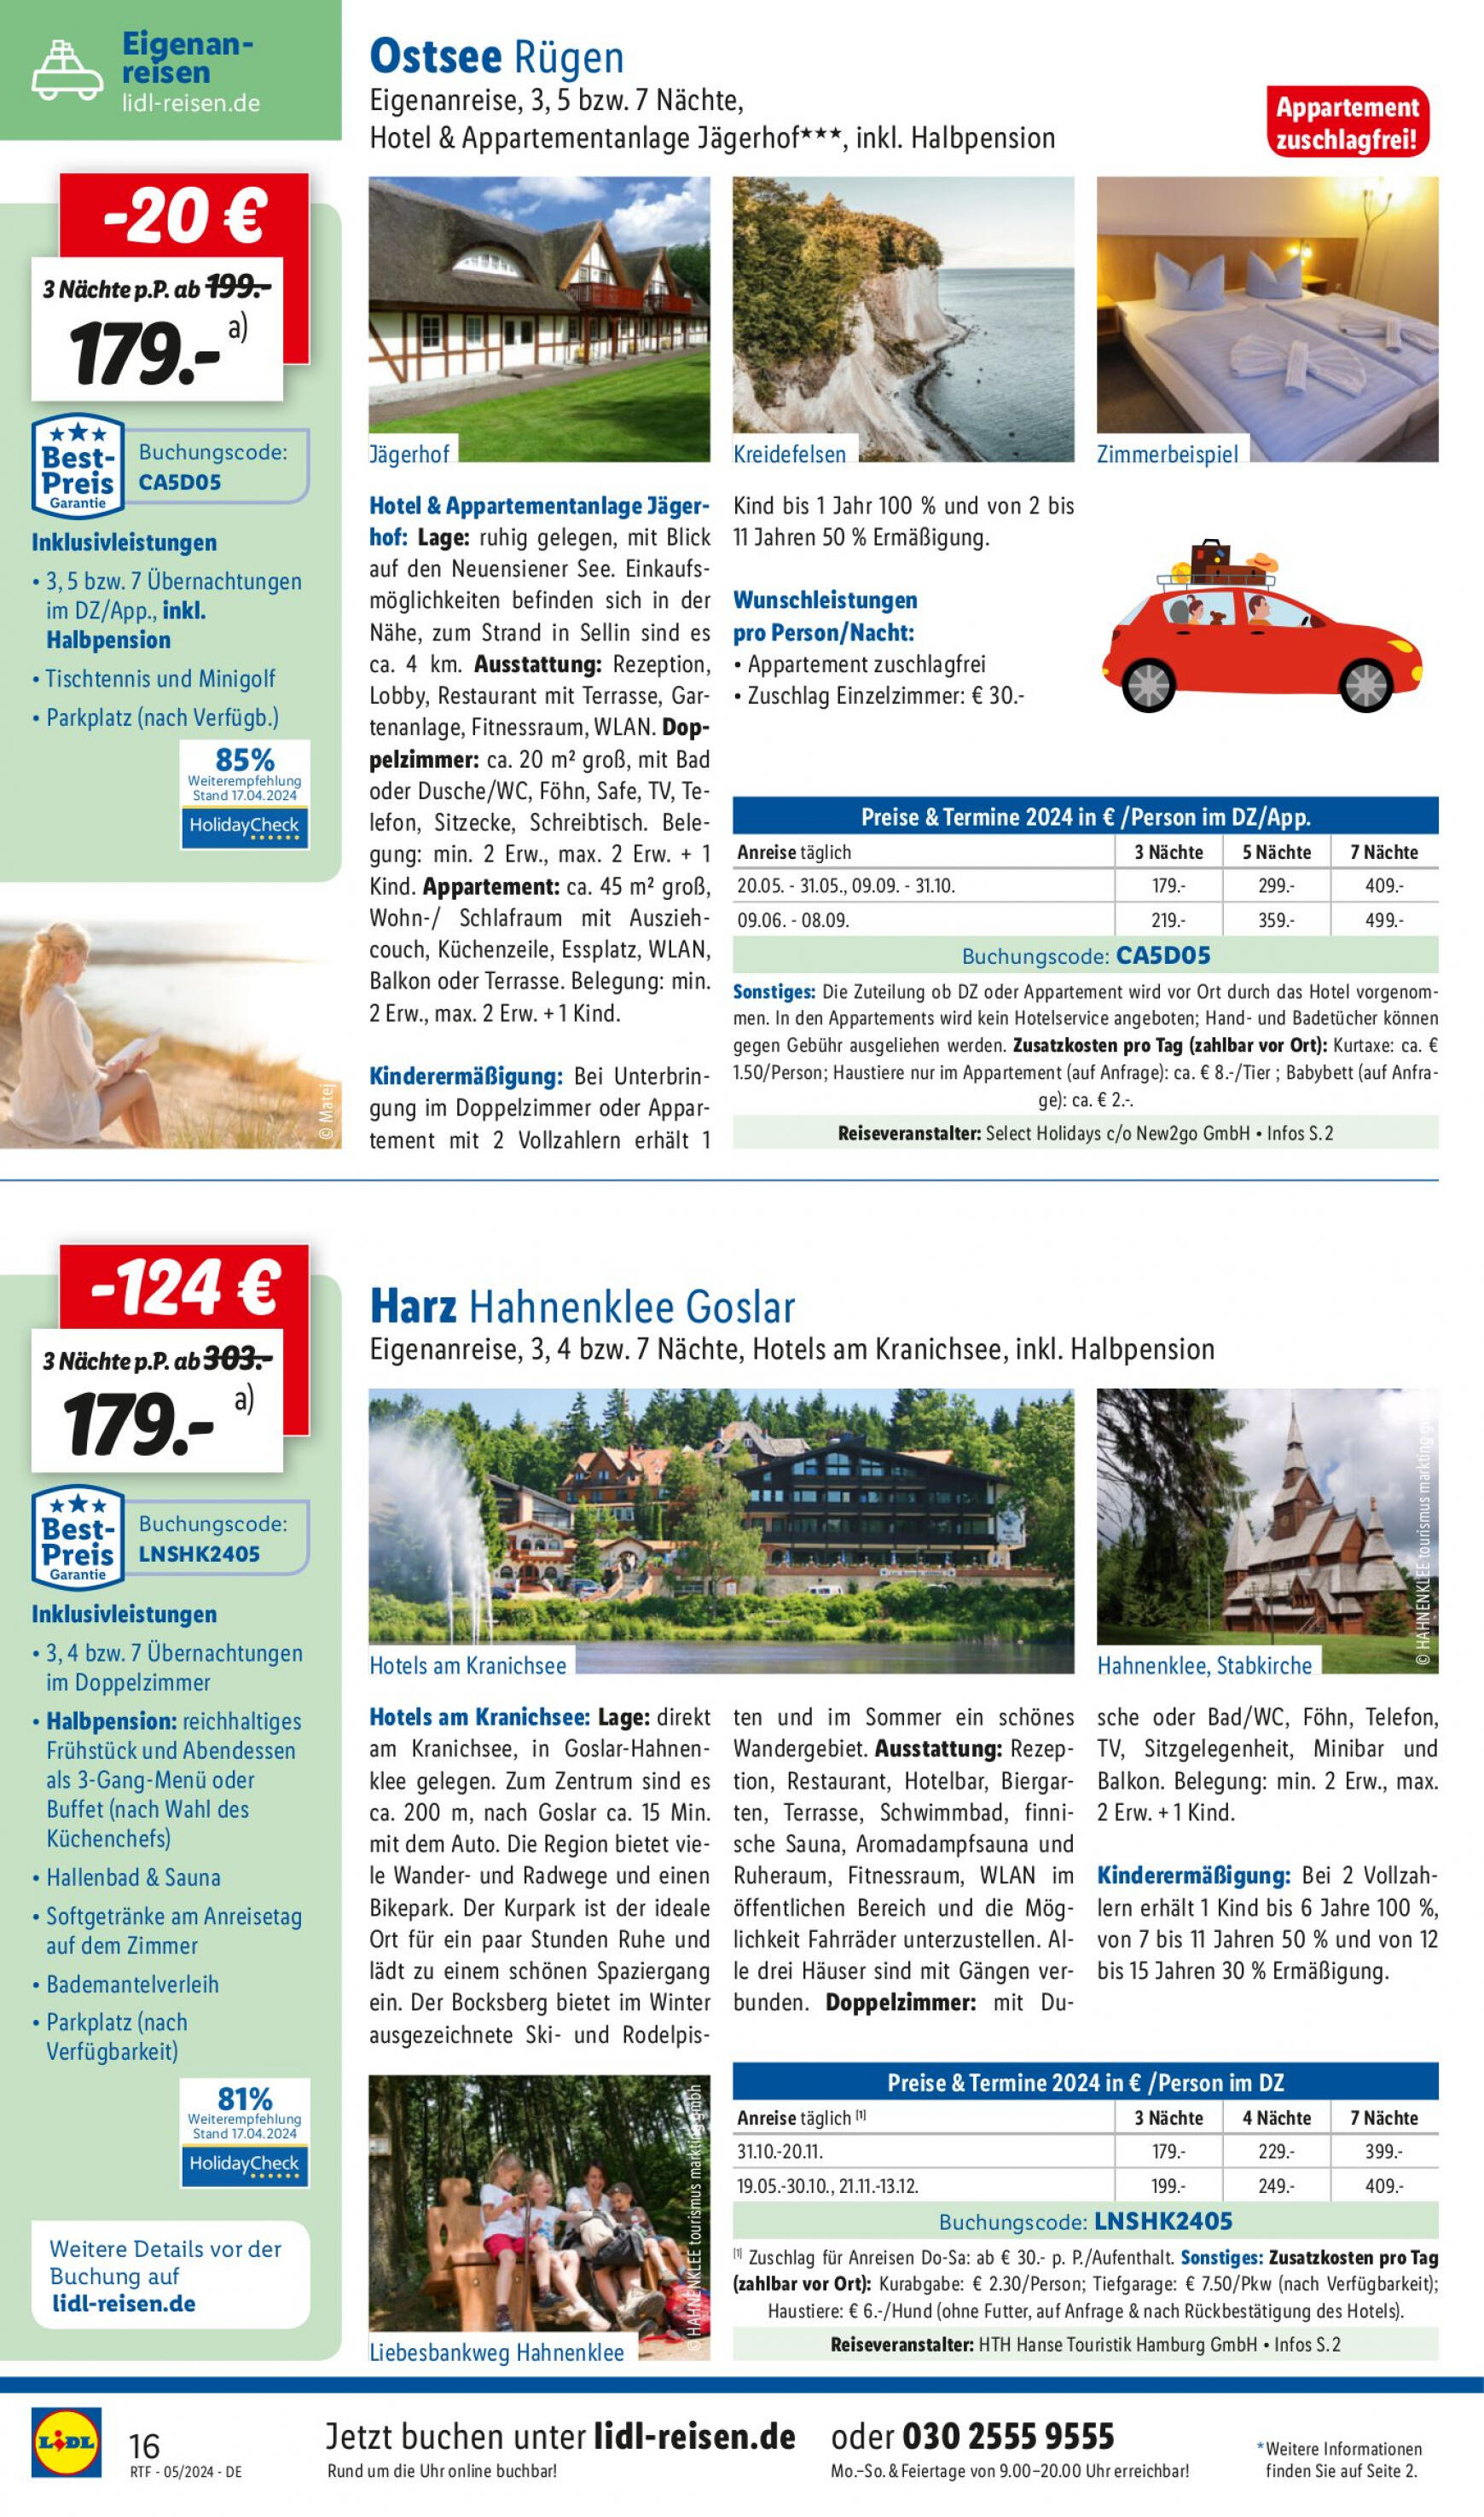 lidl - Flyer Lidl-reisen.de aktuell 15.05. - 15.06. - page: 16